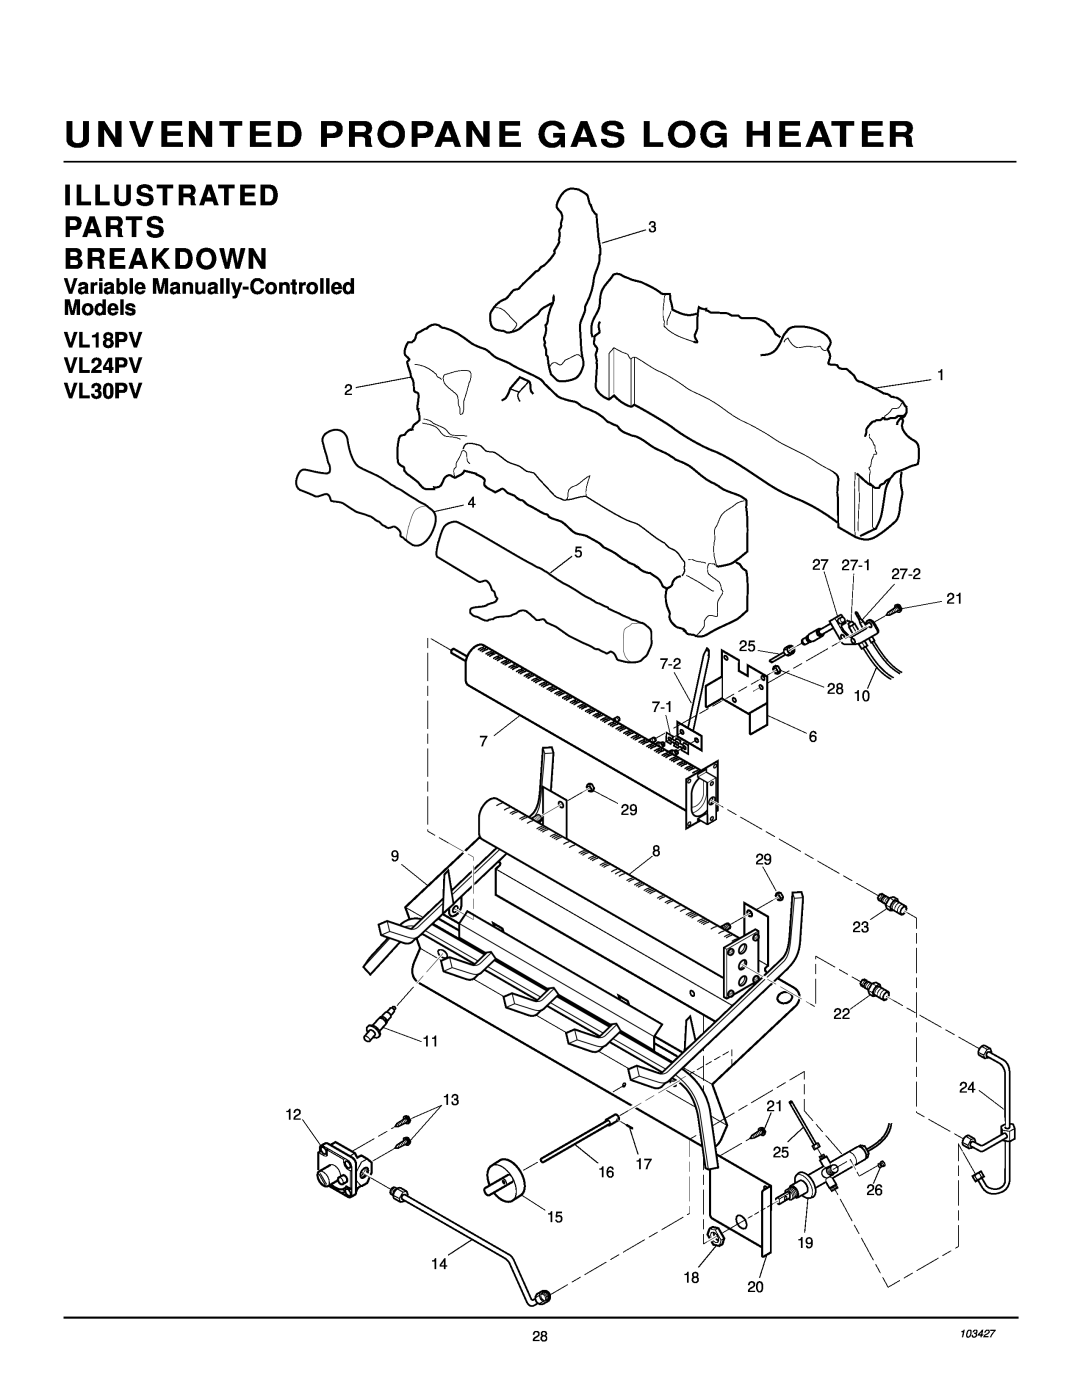 Desa Unvented Propane Gas Log Heater Model Split Oak and American Oak Design ILLUSTRATED PARTS3 BREAKDOWN, VL30PV2 